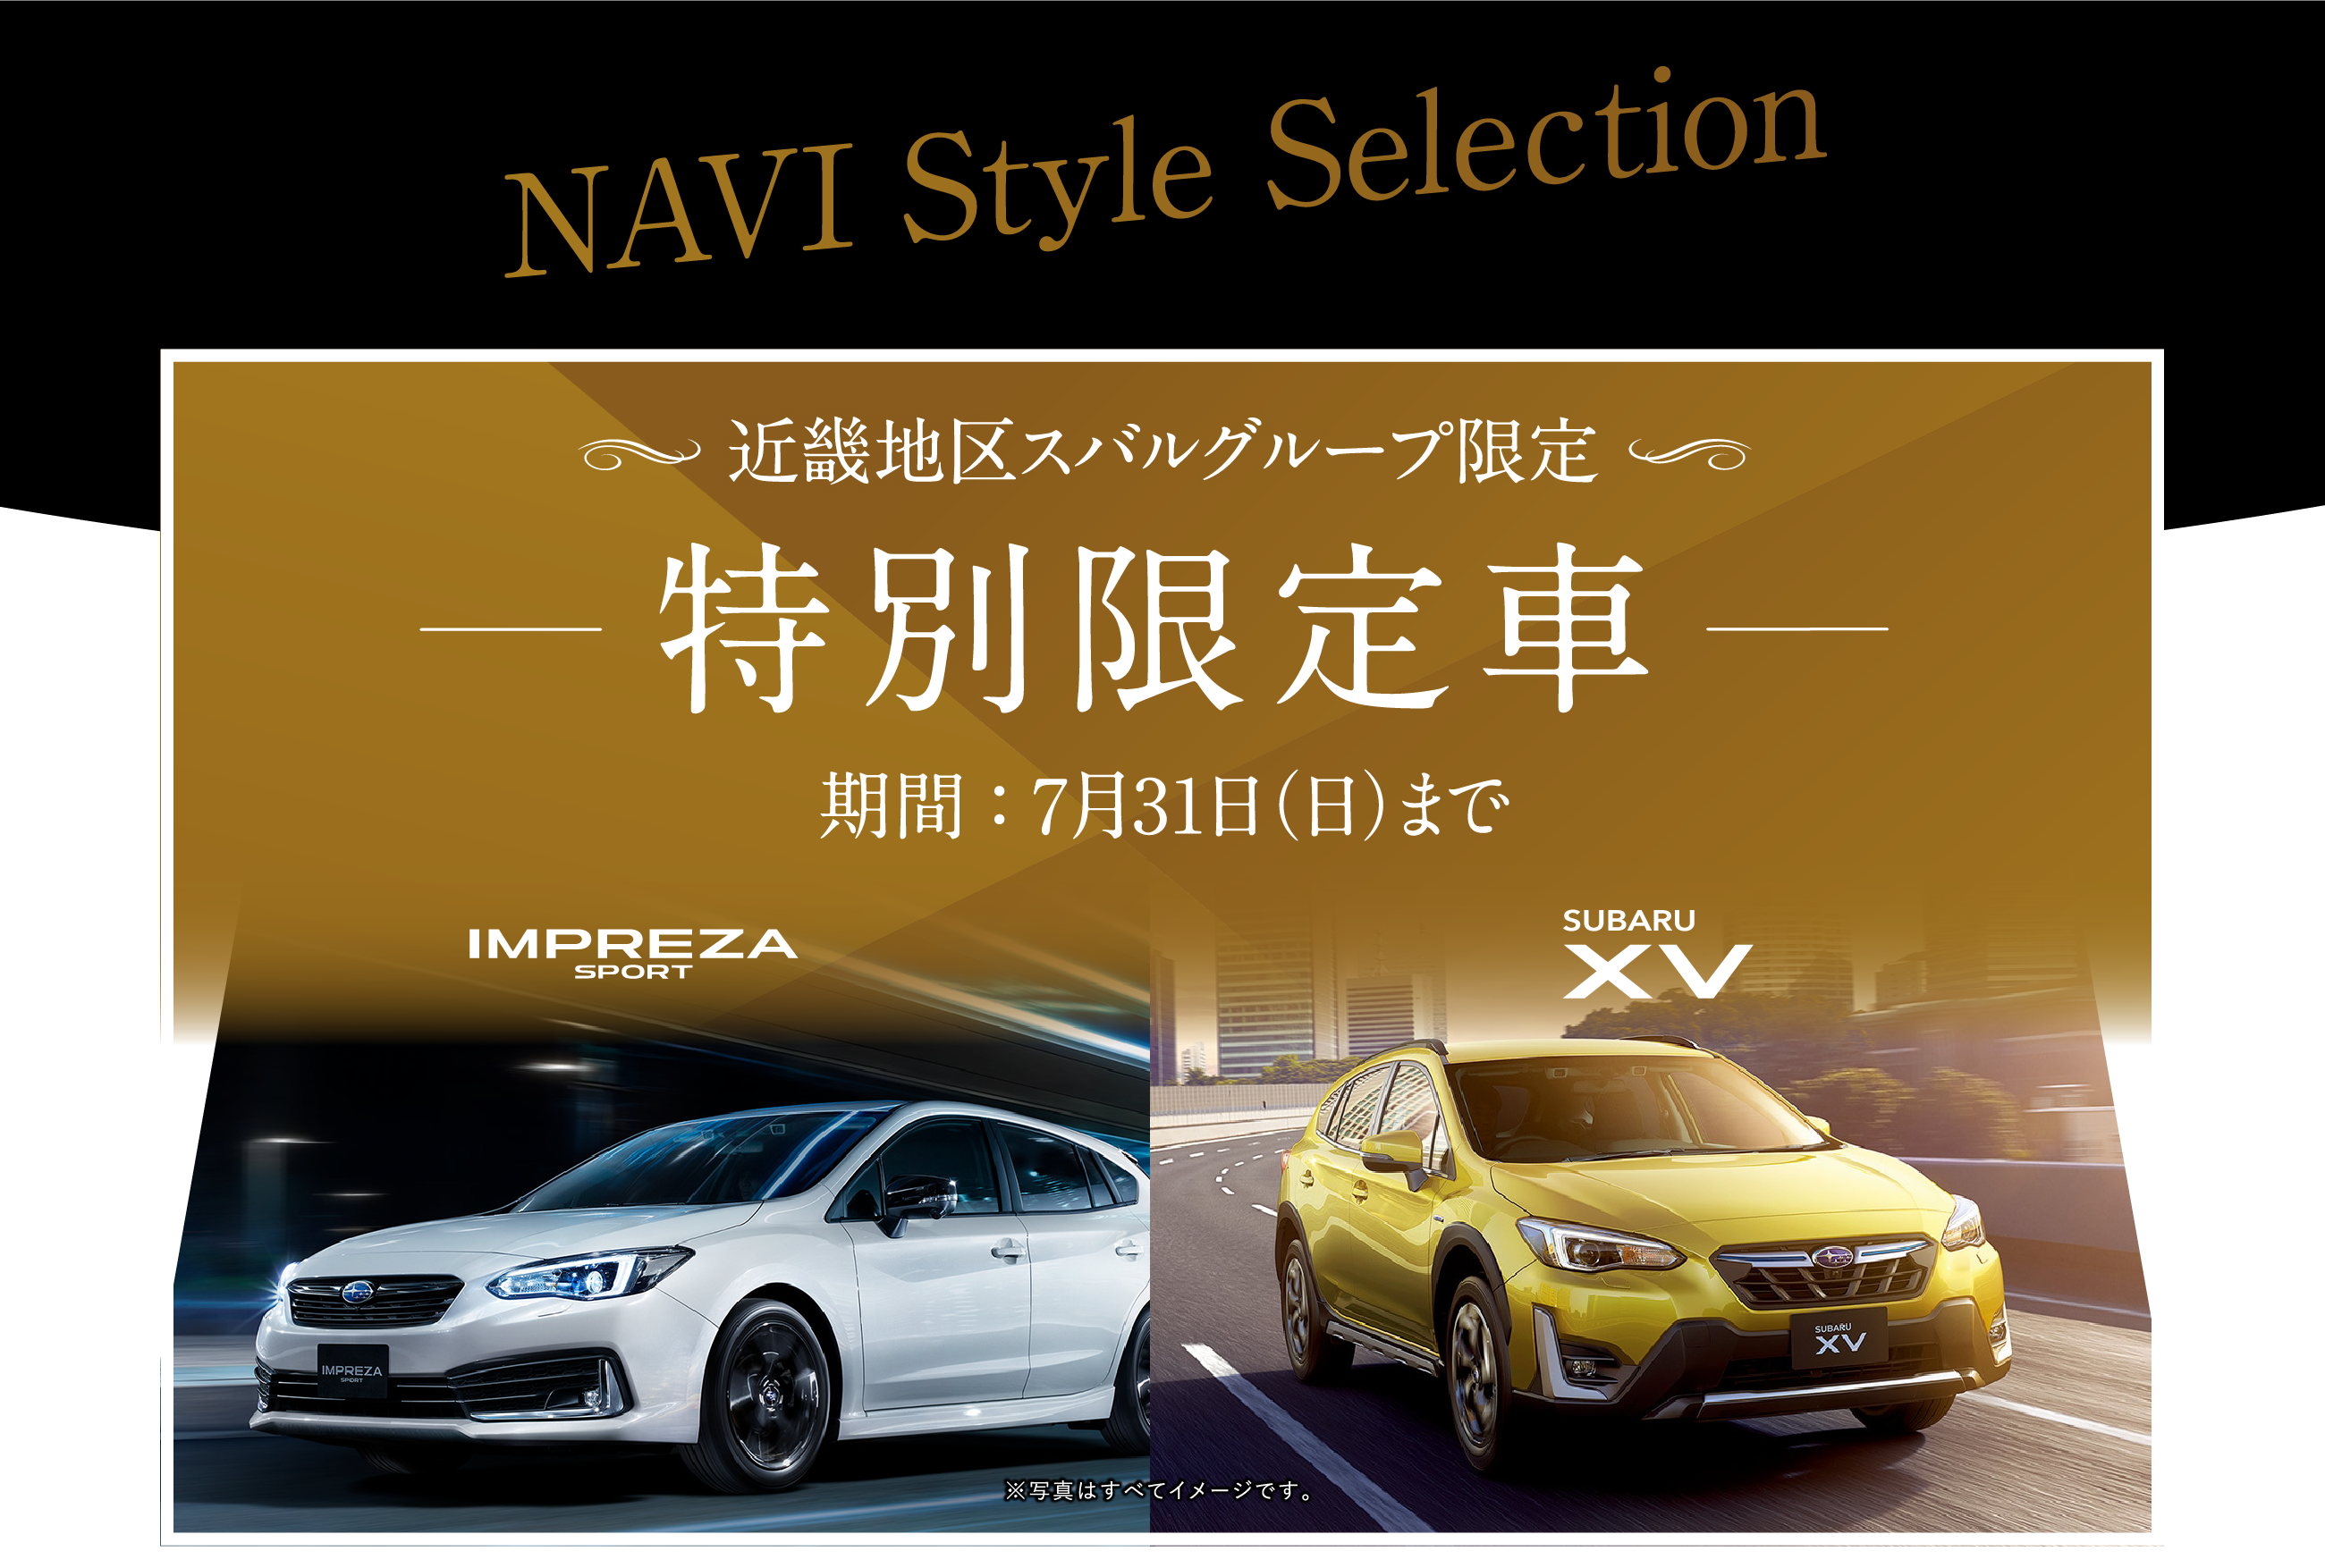 NAVI Style Selection 近畿地区スバルグループ限定 特別限定車 期間 ： 7月31日（日）まで